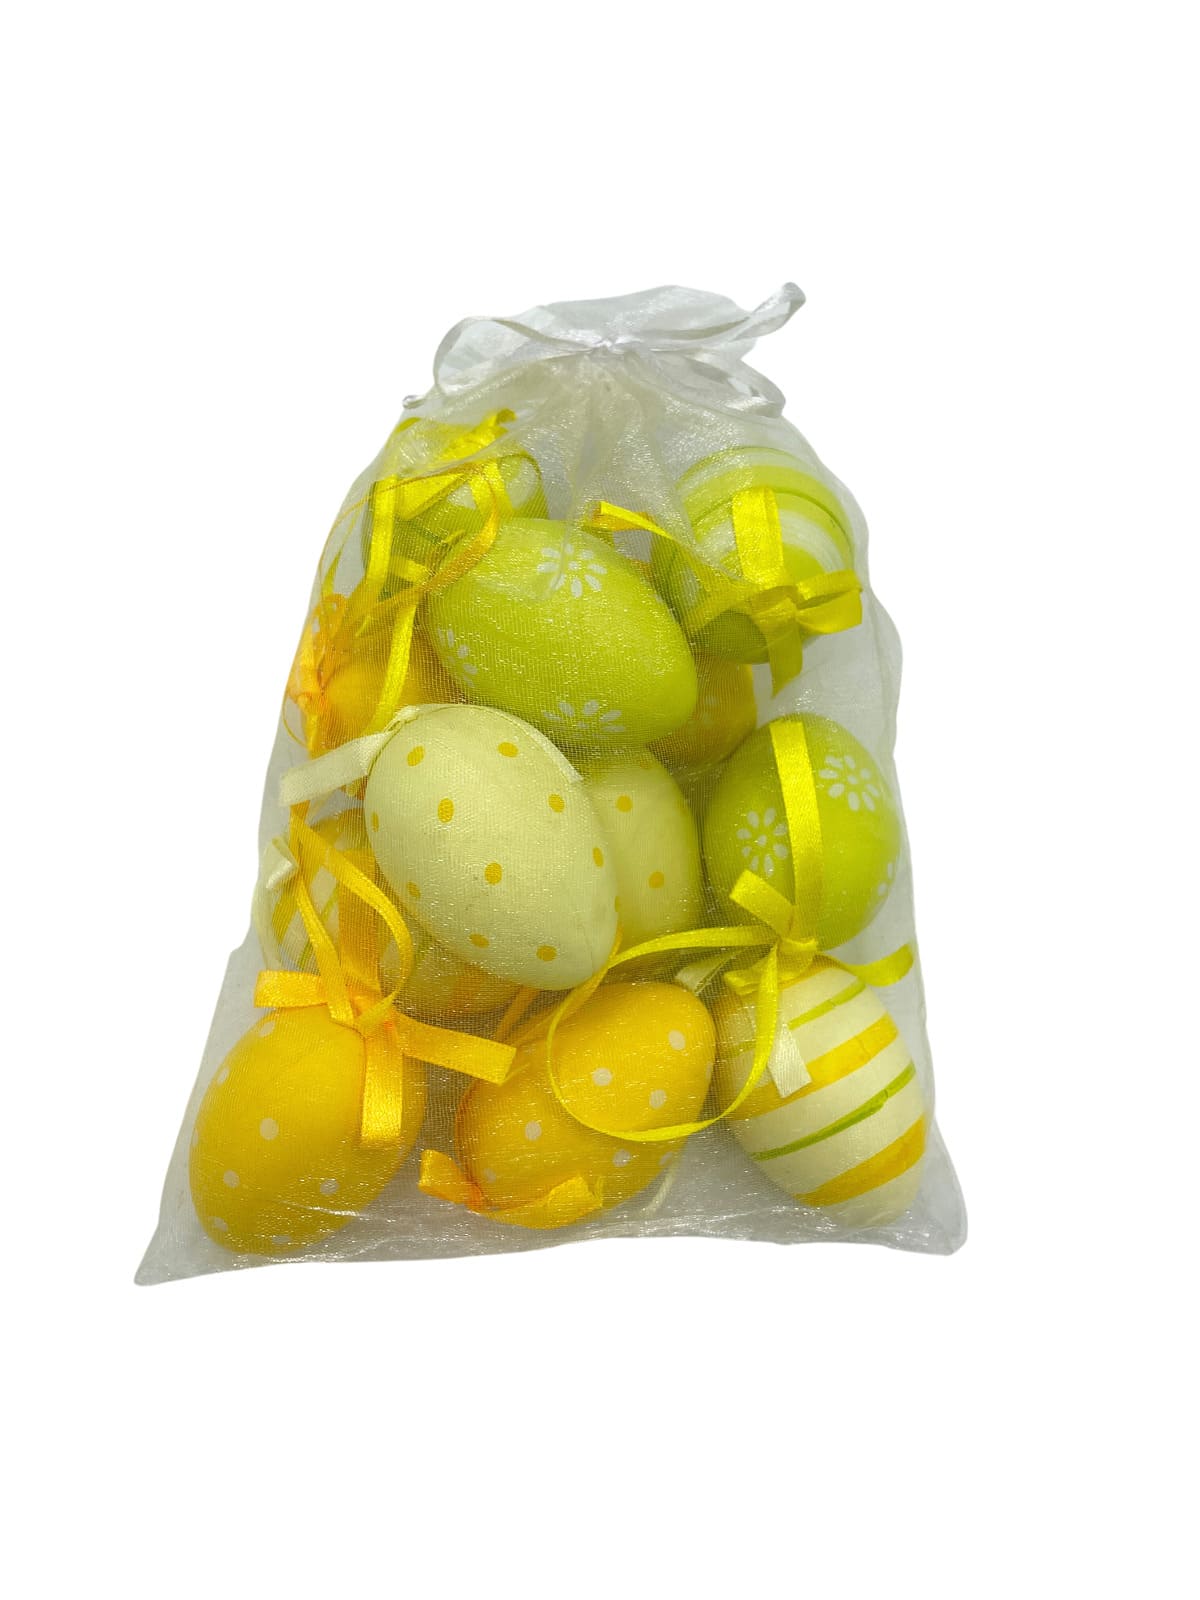 Sacchettino con 12 uova pasquali gialle